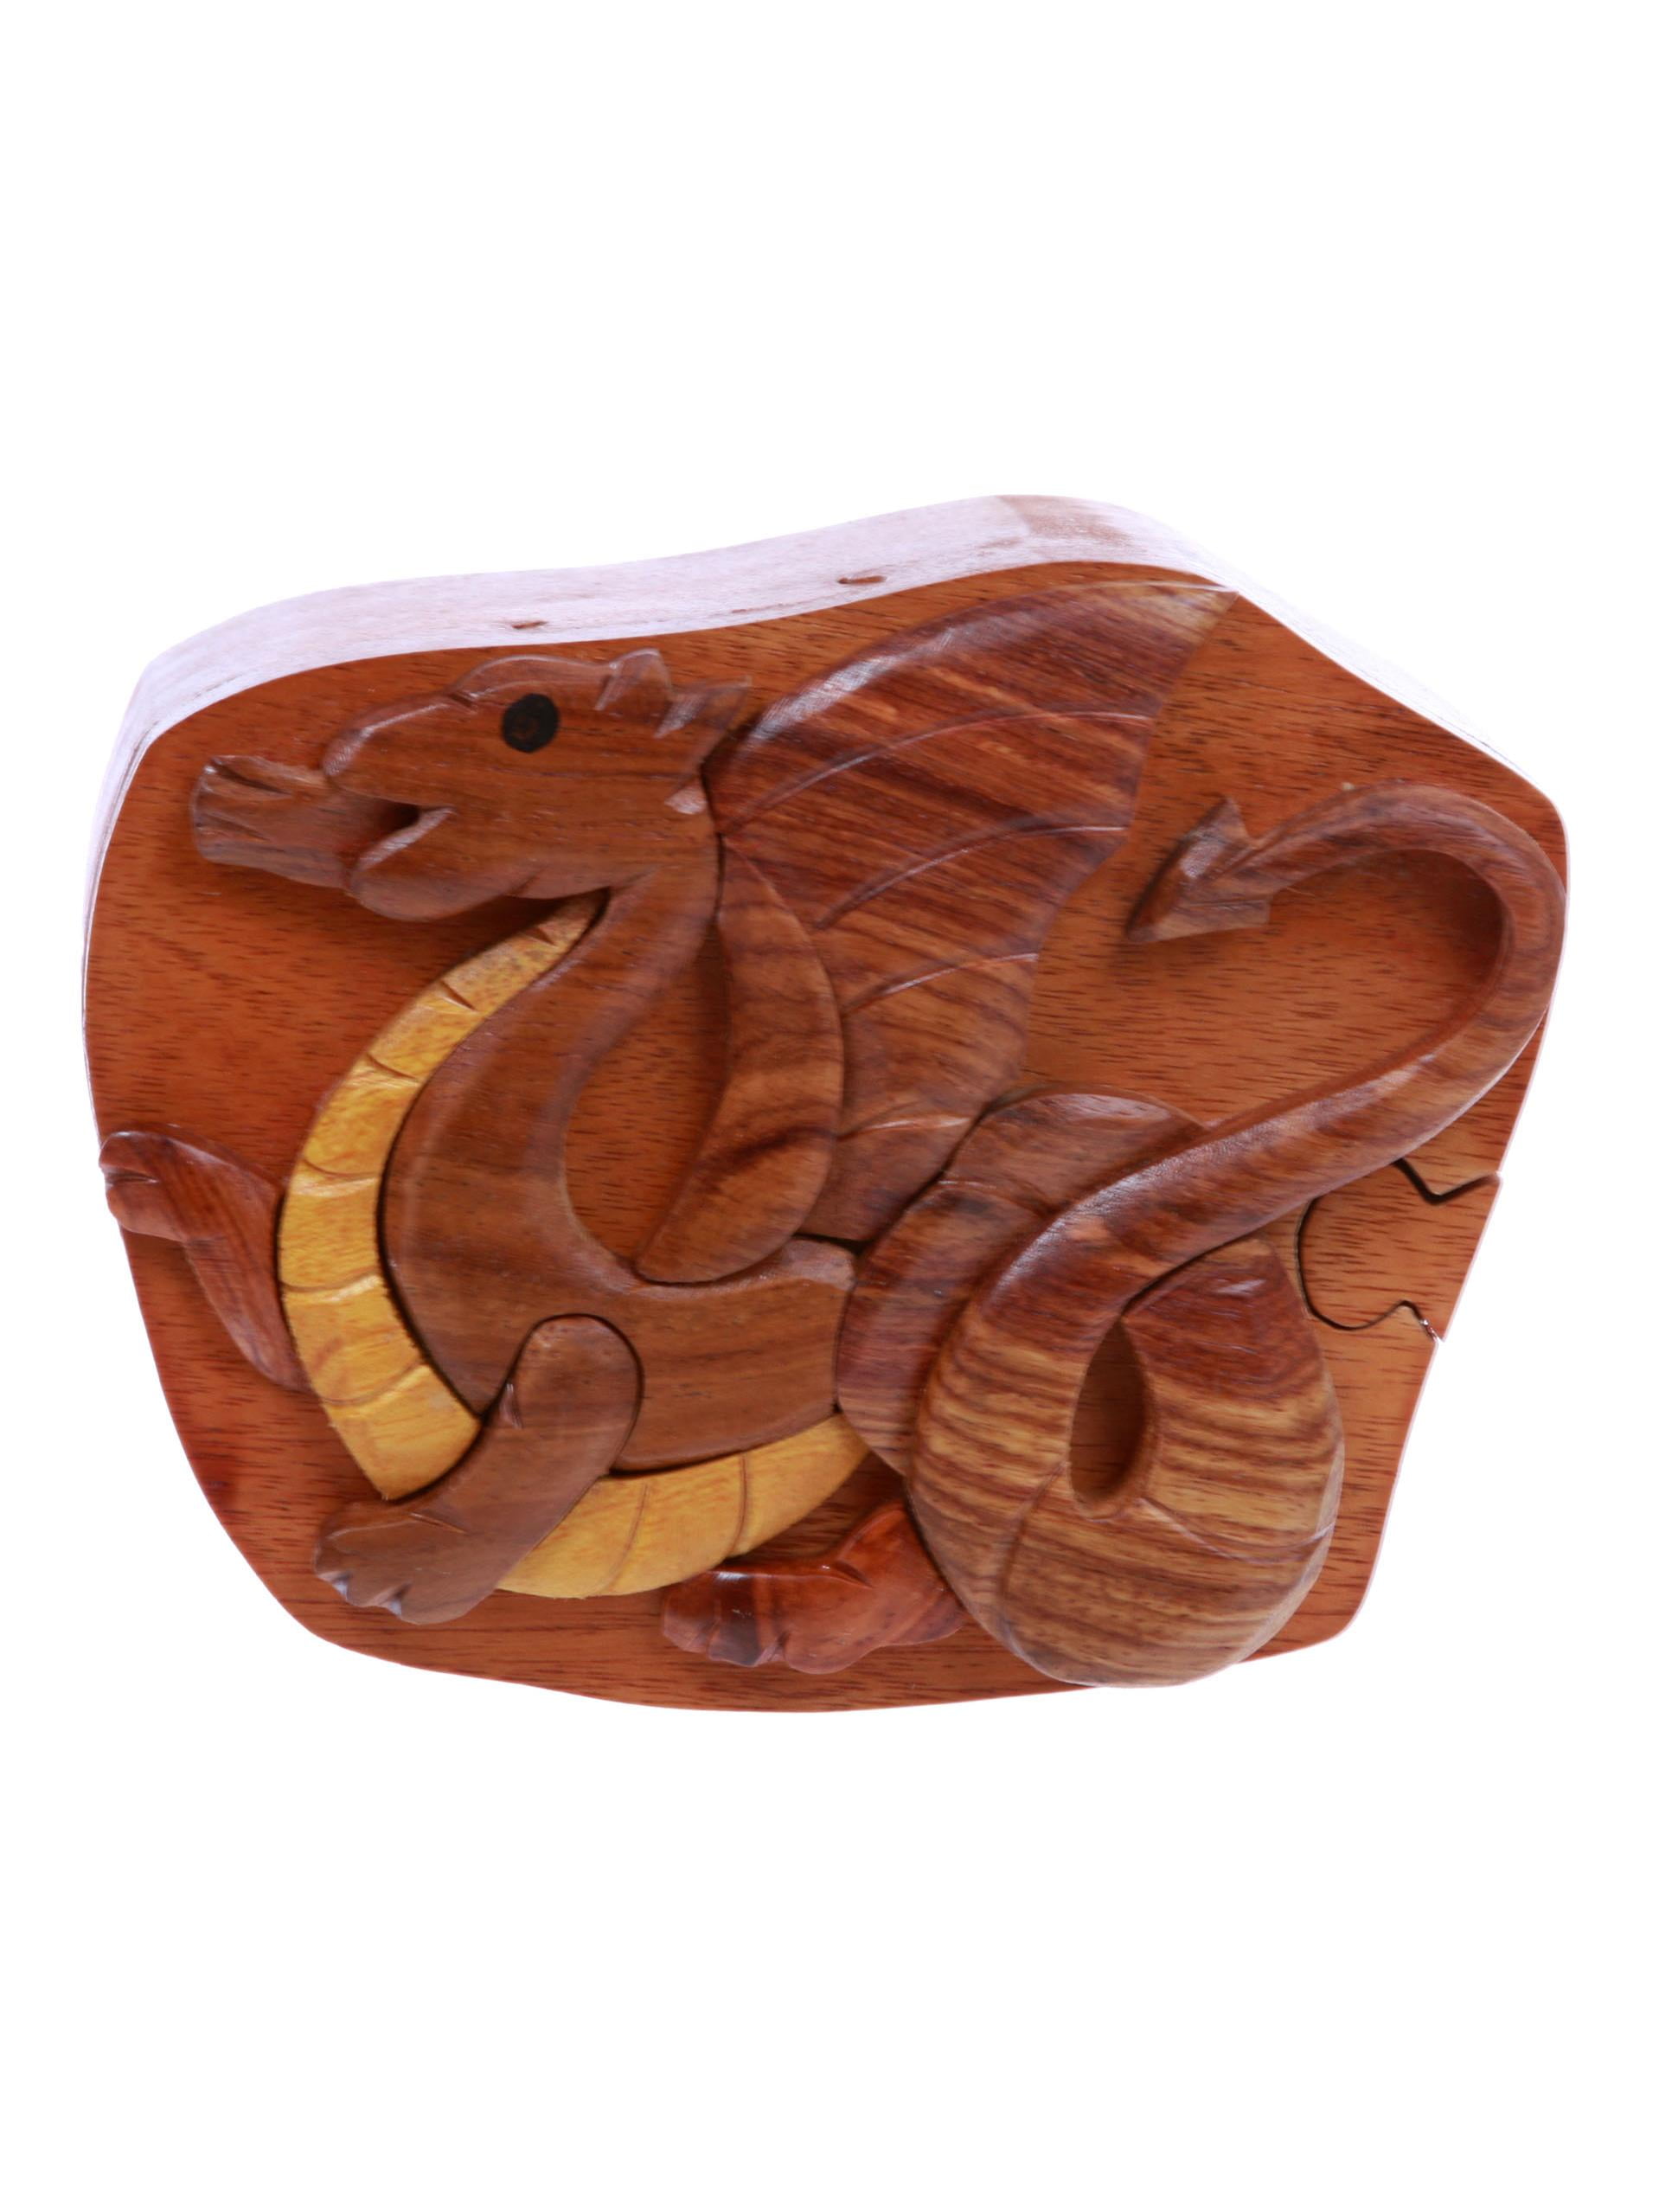 Batman Handcrafted Carved Intarsia Wood Puzzle Box Jewelry Trinket Box 